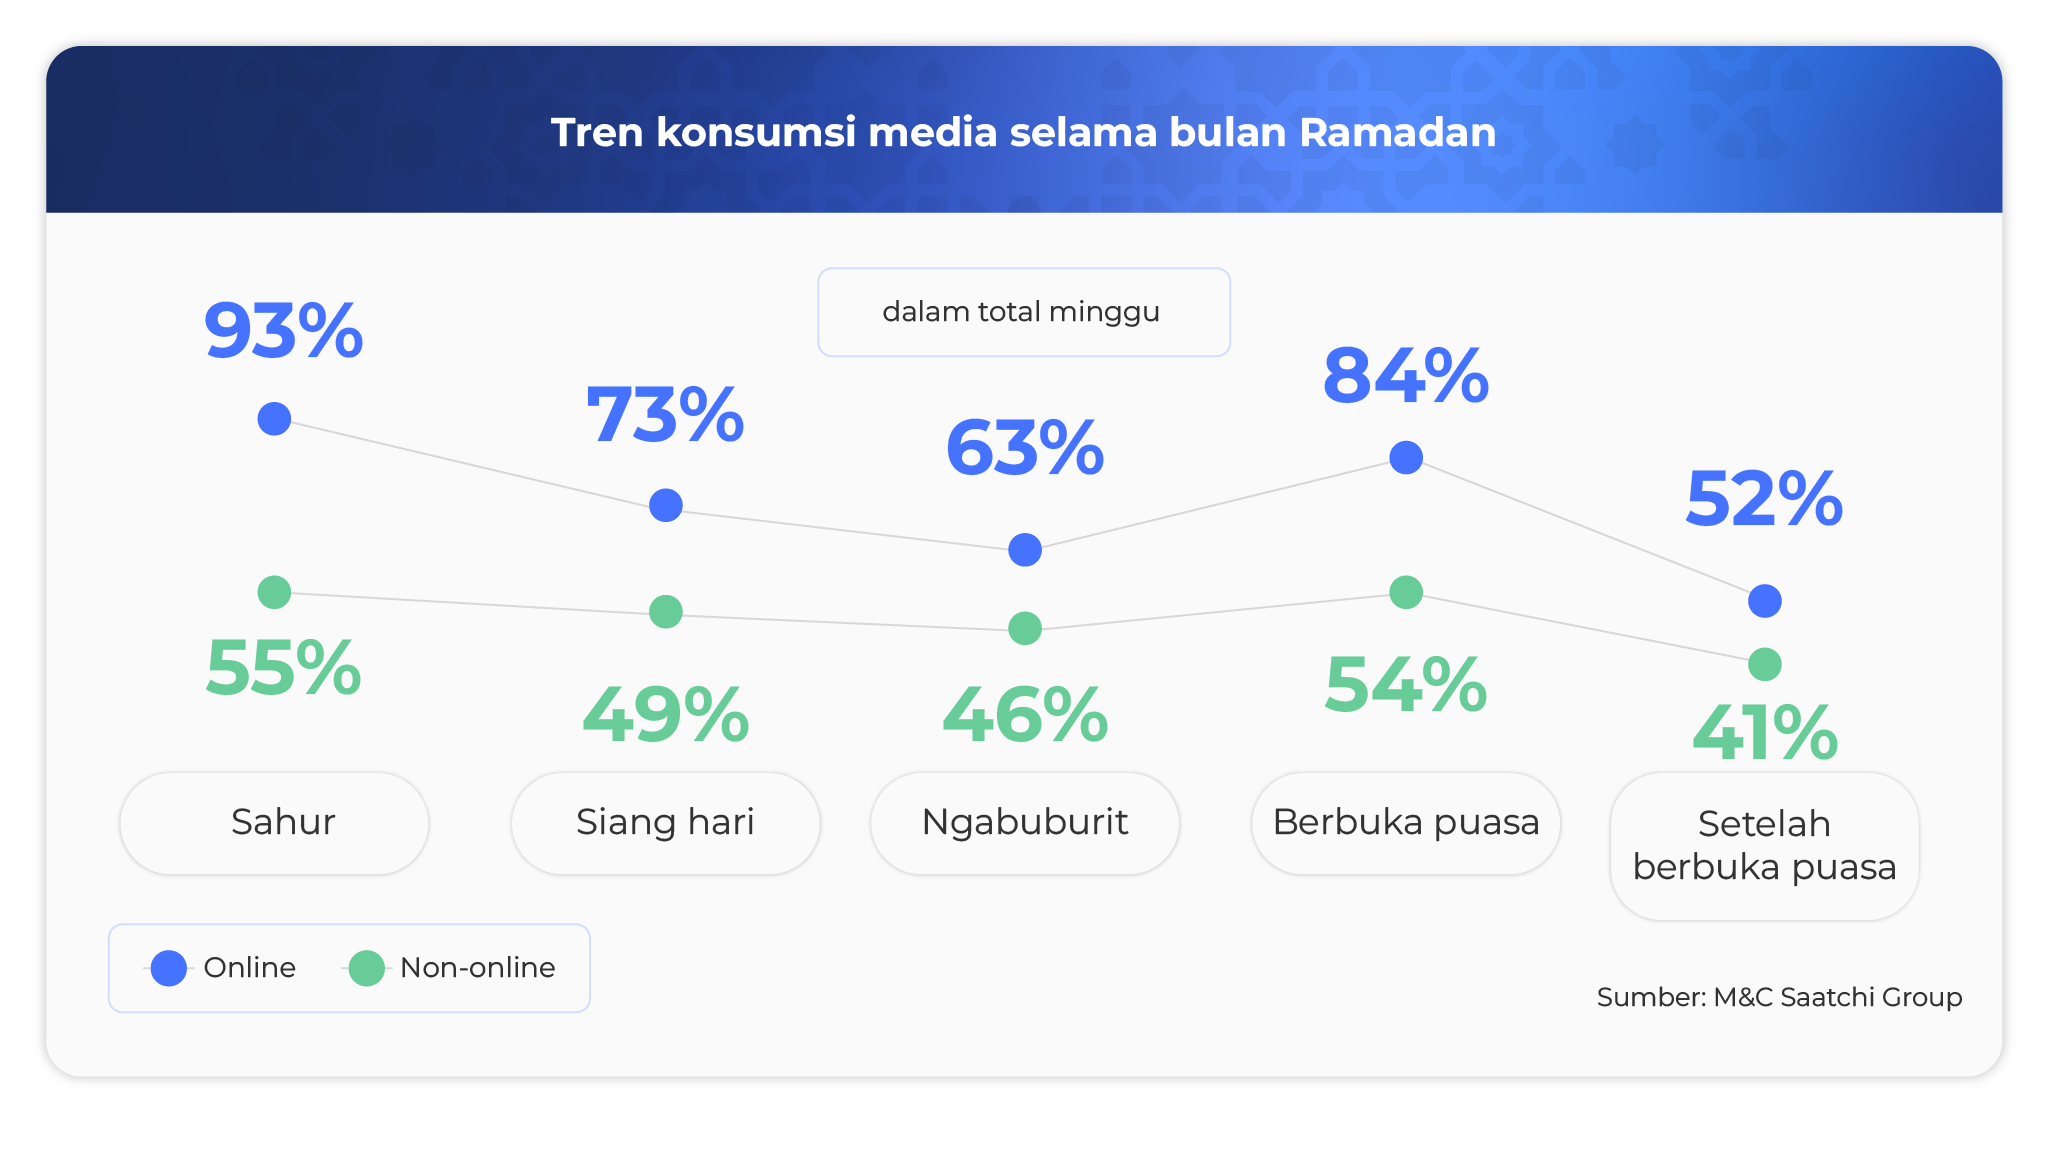 Tren konsumsi media selama bulan Ramadan